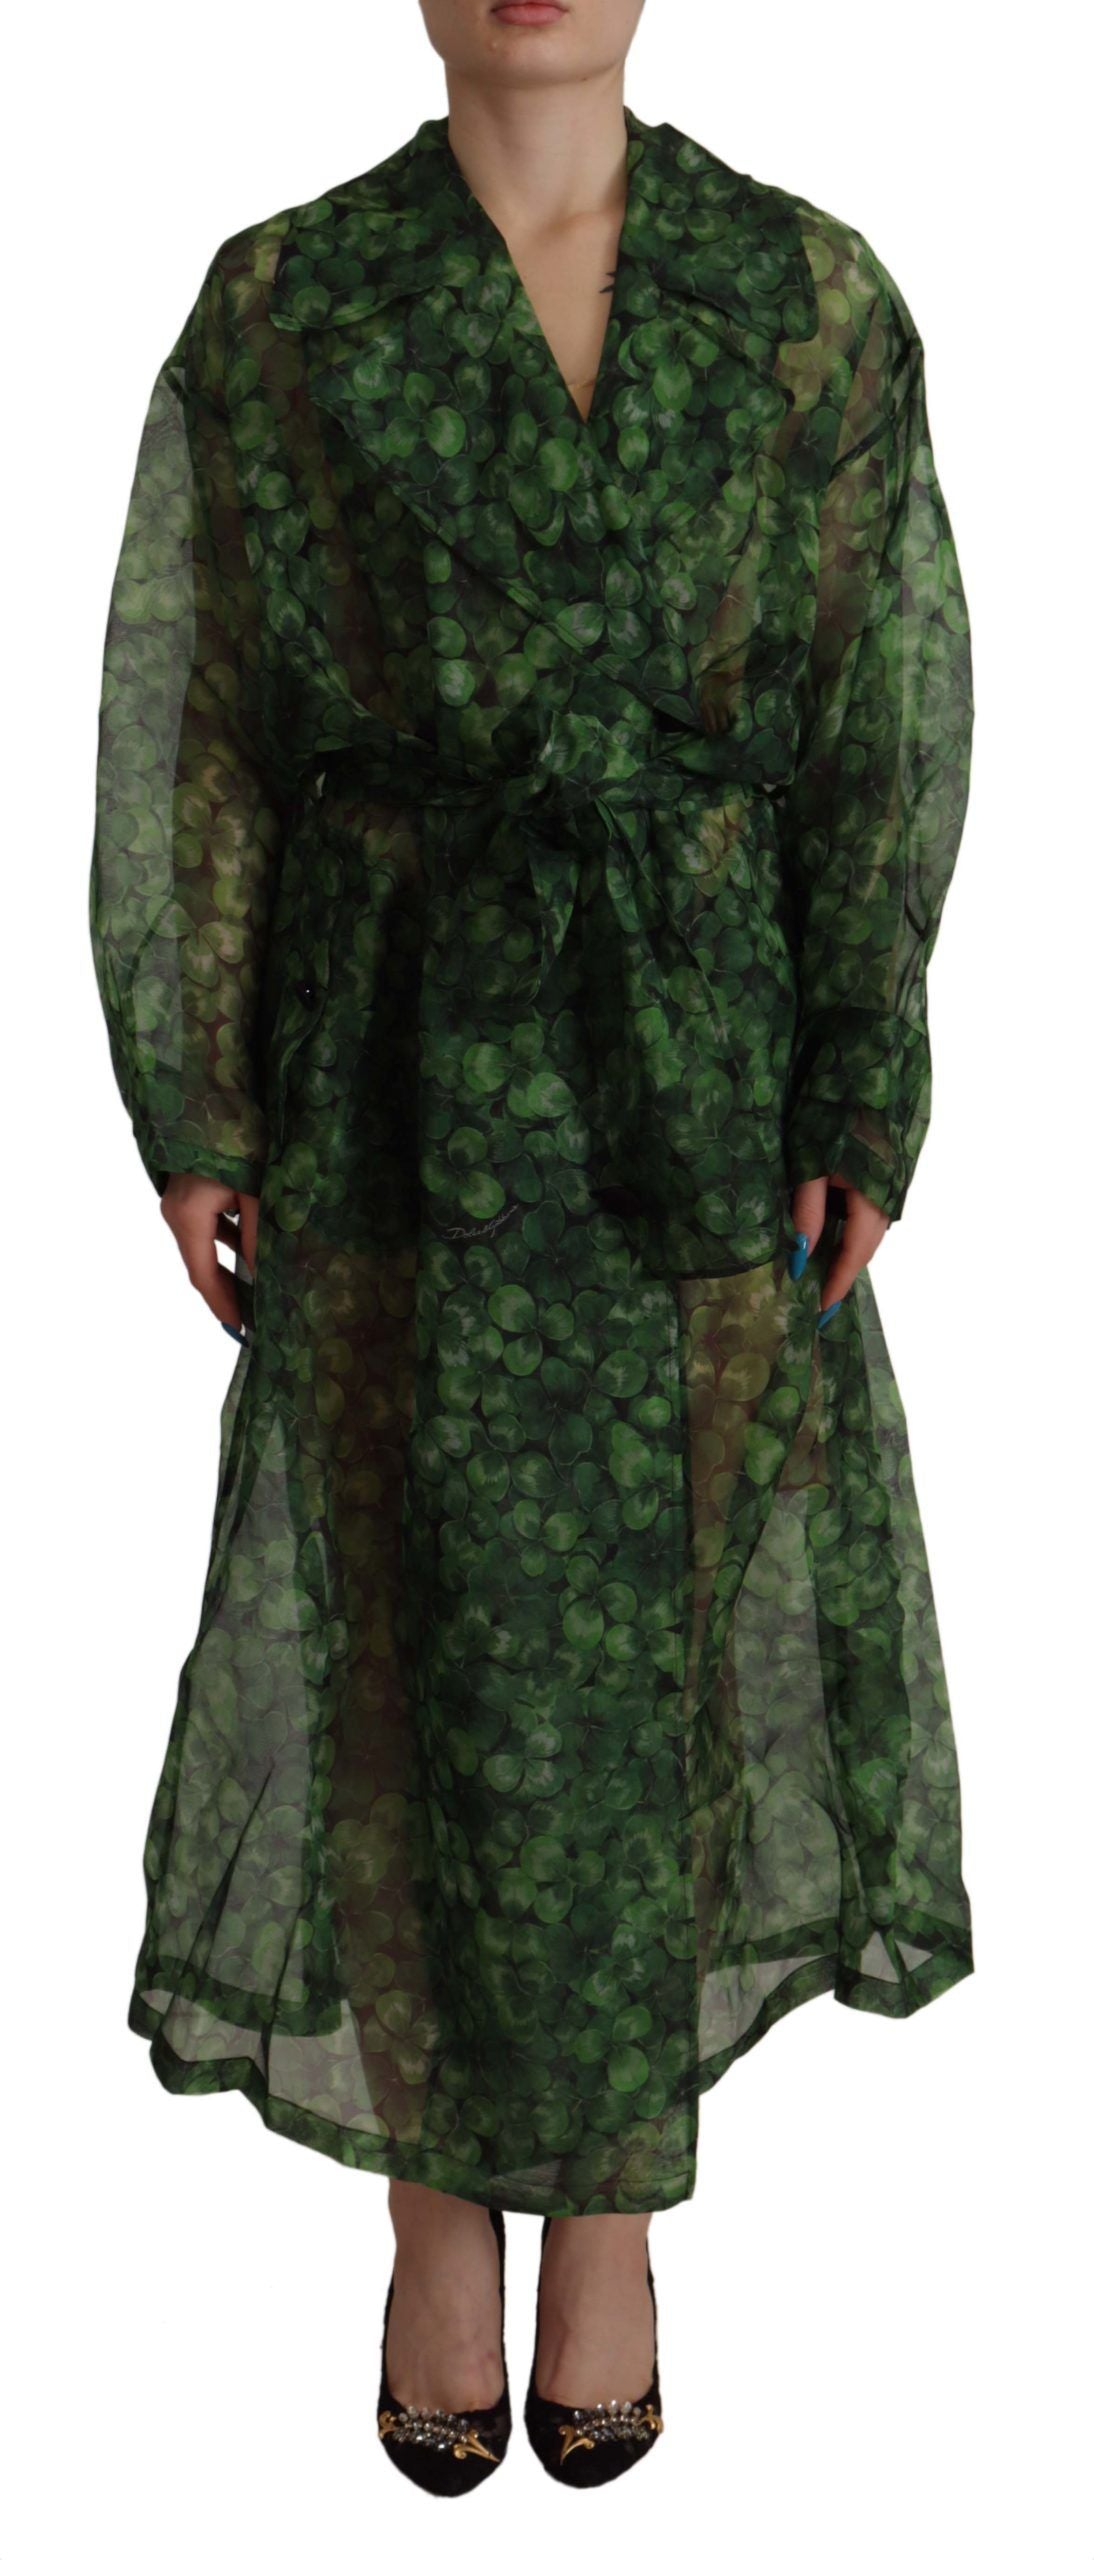 Dolce & Gabbana Green, black Coat Jacket Four Leaf Clover Print Organza Trench Dress